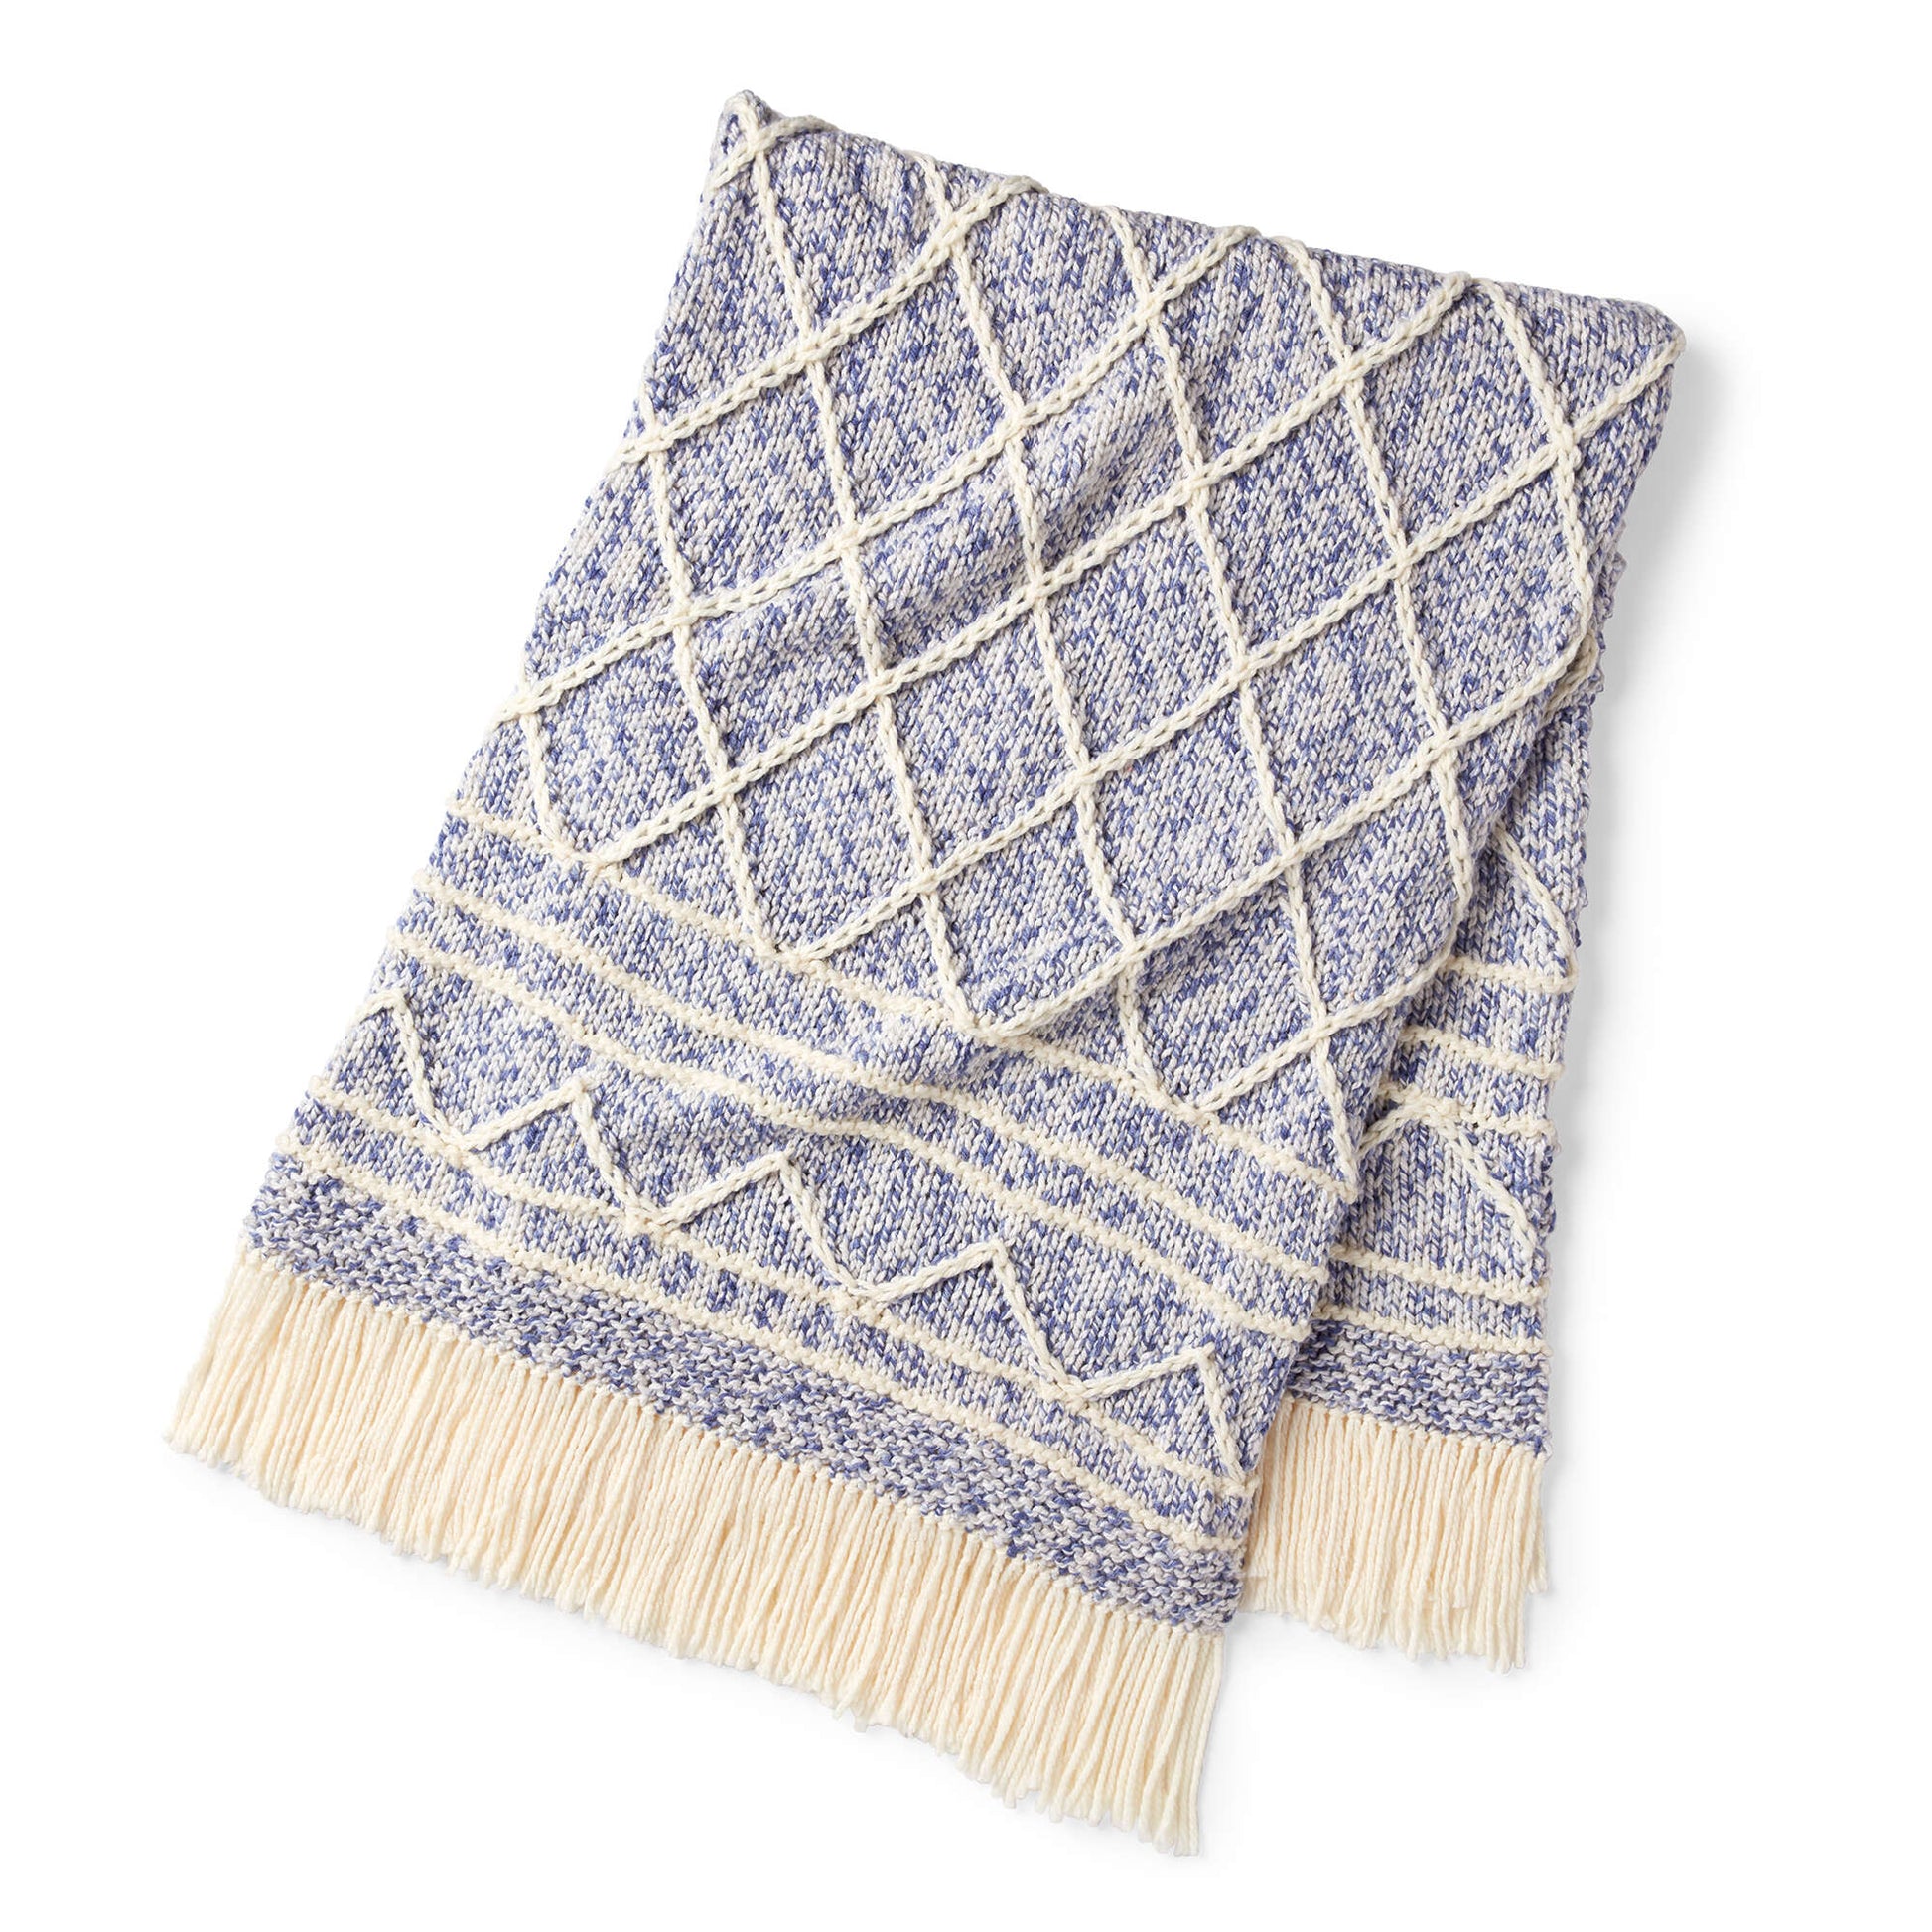 Bernat Twisted Textures Knit Blanket Single Size